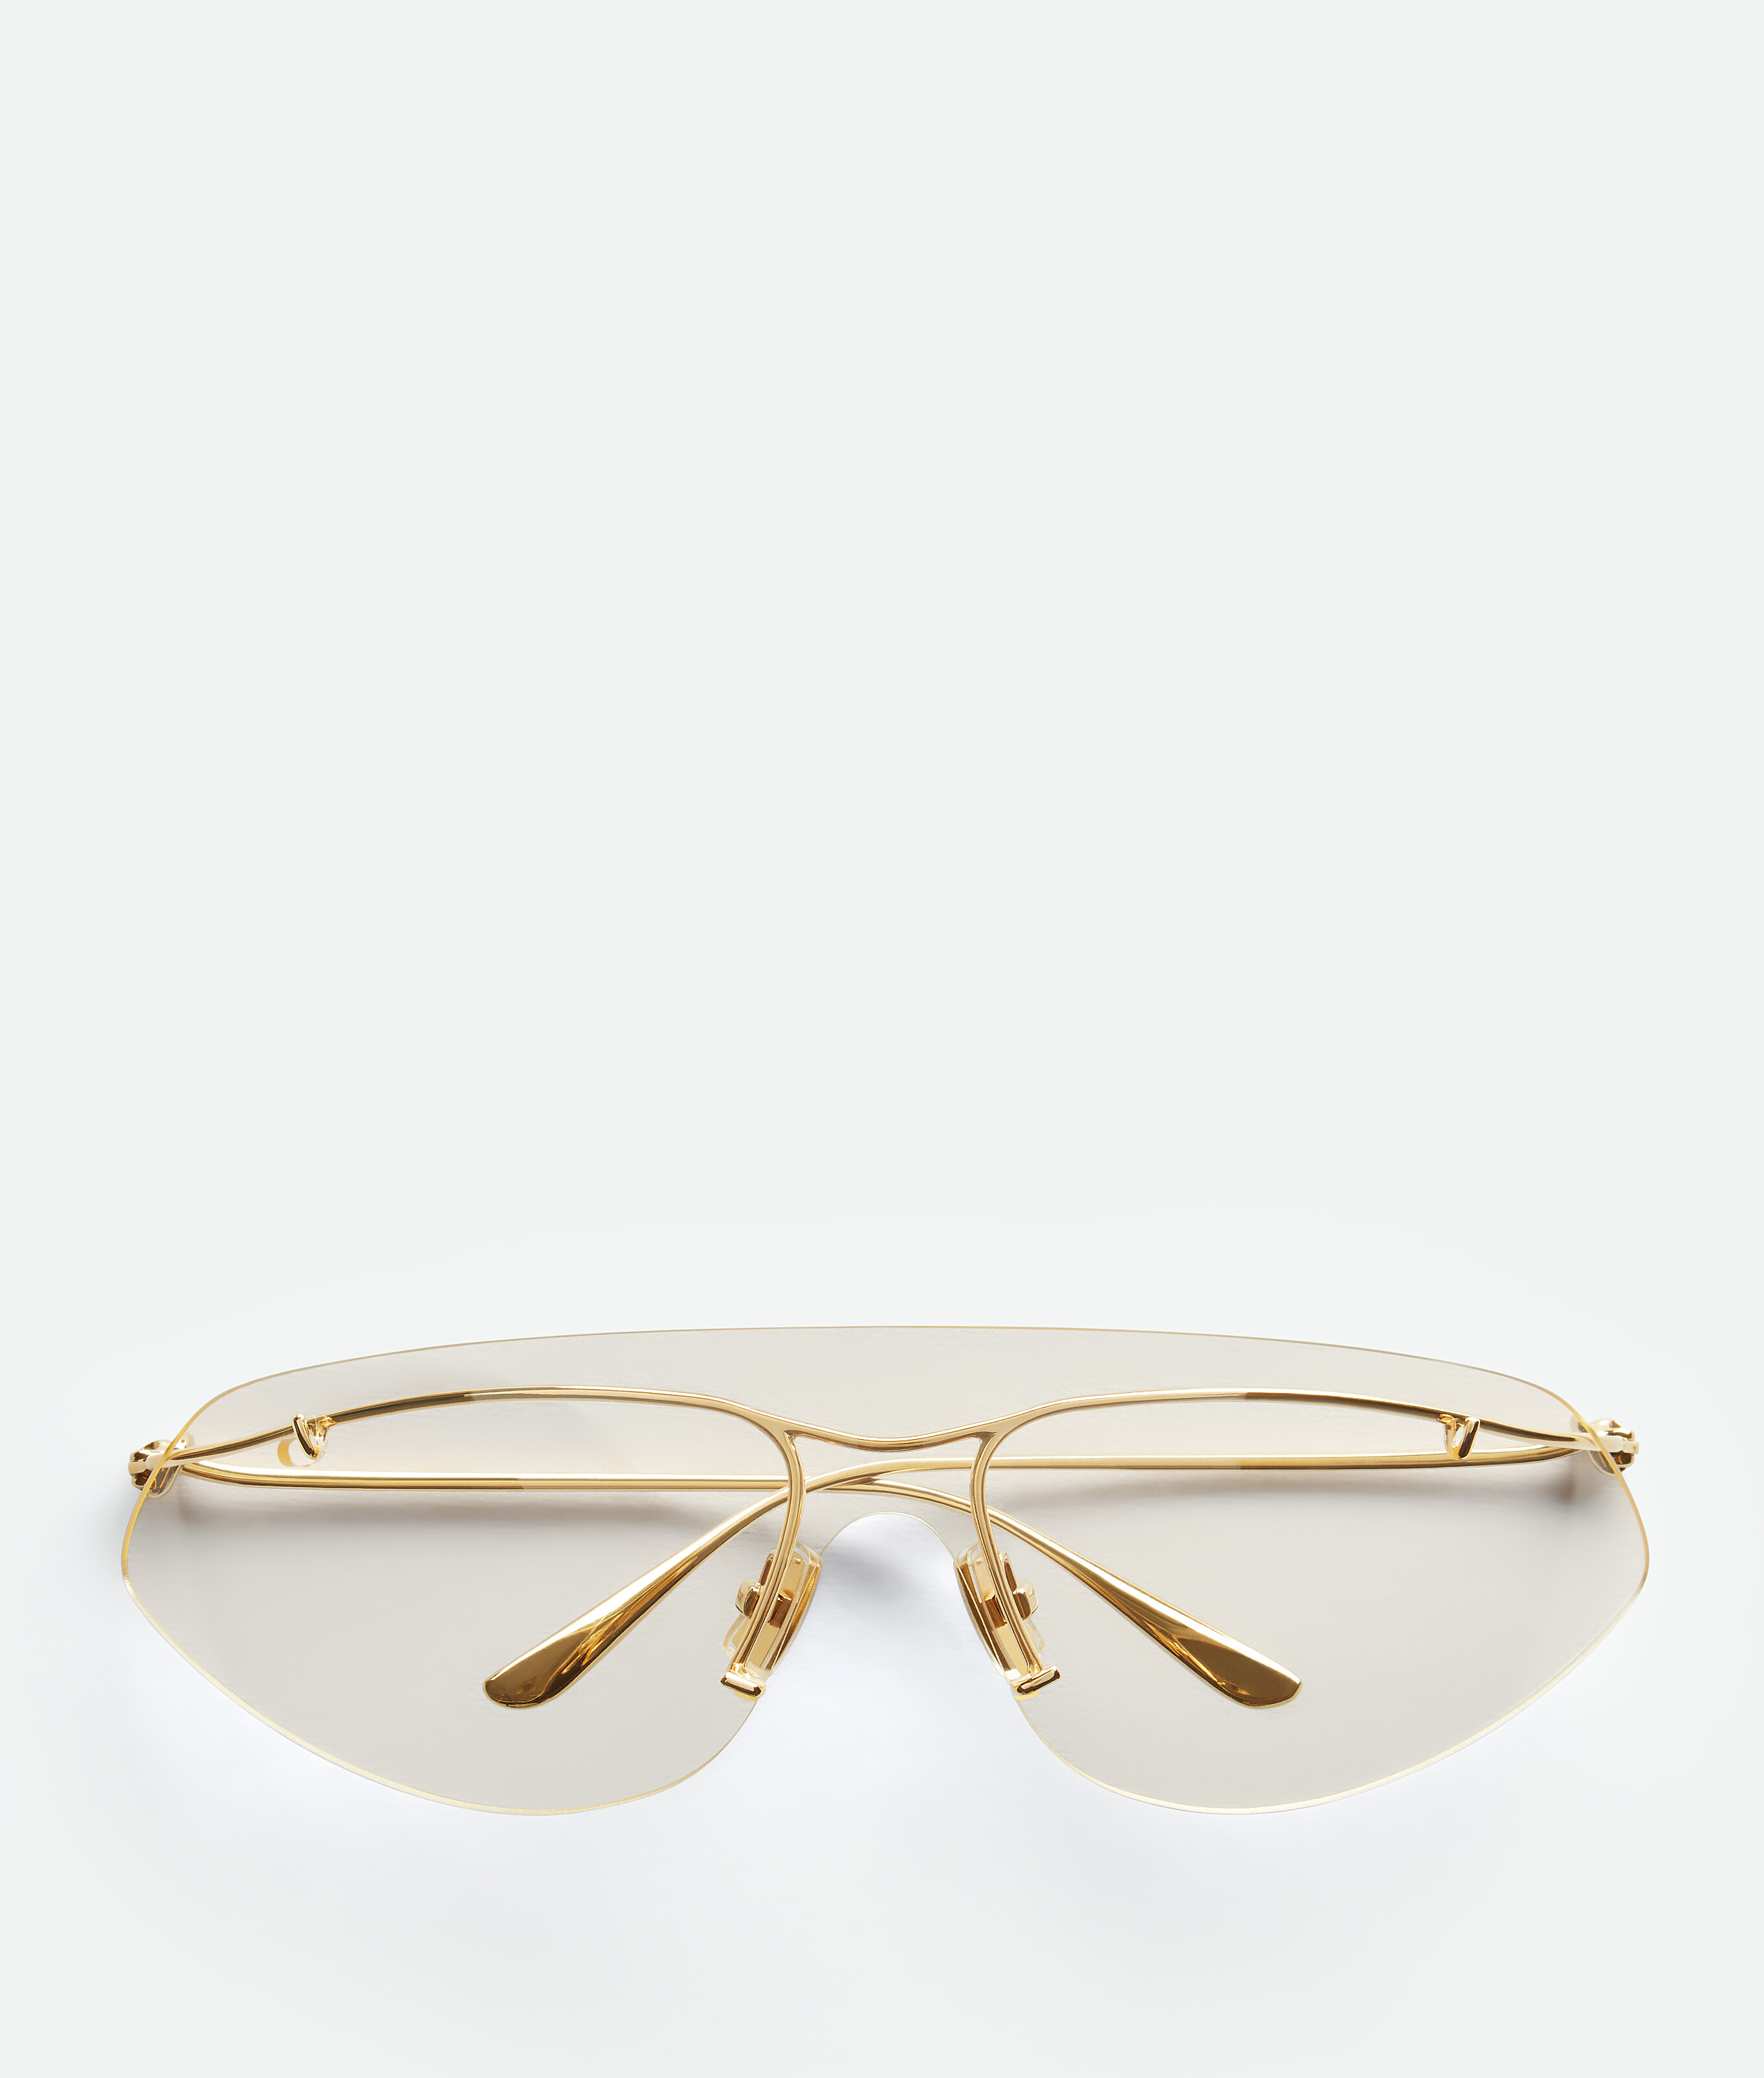 Bottega Veneta Bracelet  Sunglasses women, Yellow gold, Bottega